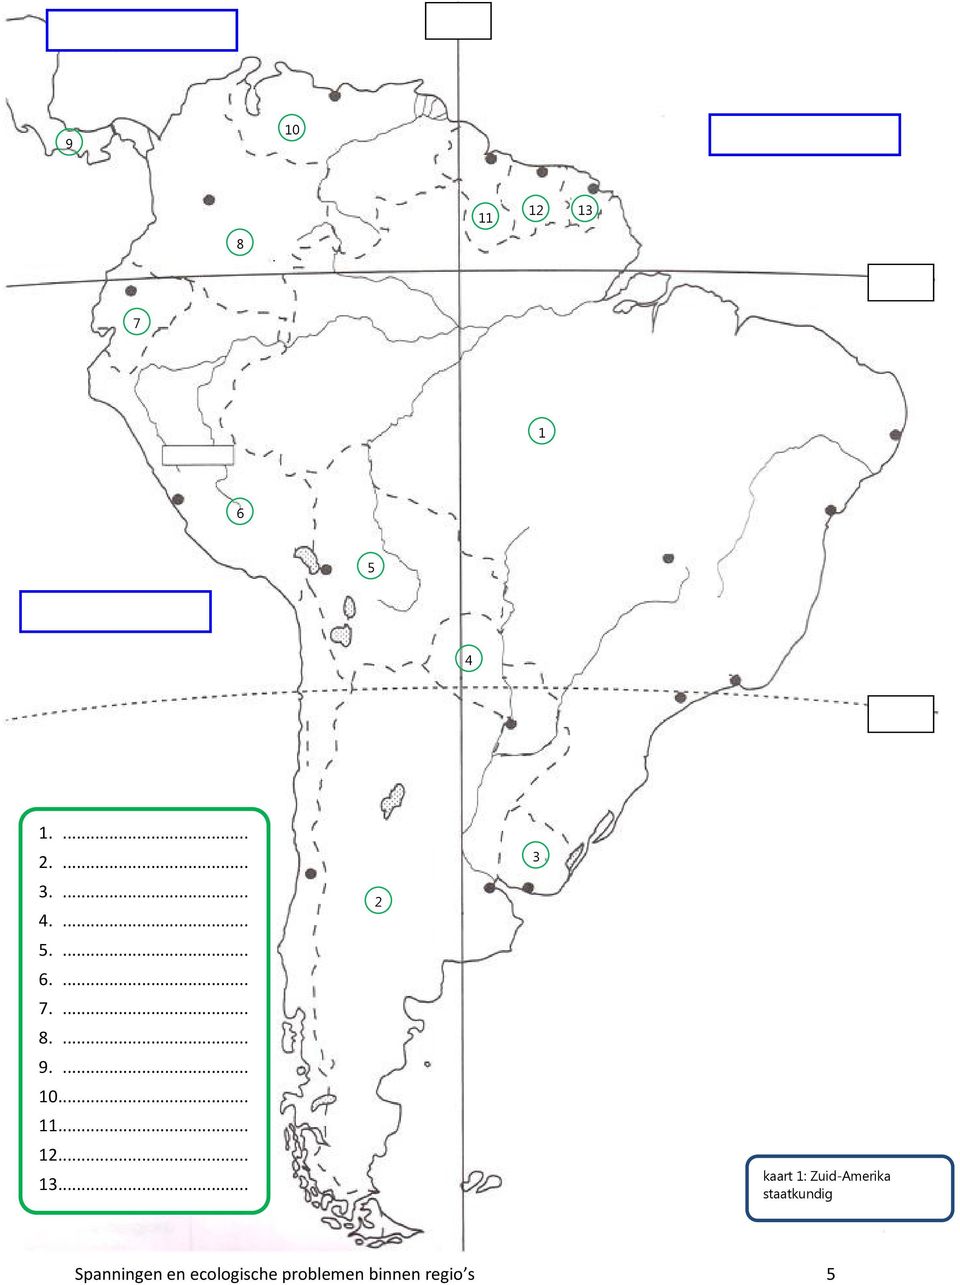 ... 2 3 kaart 1: Zuid-Amerika staatkundig